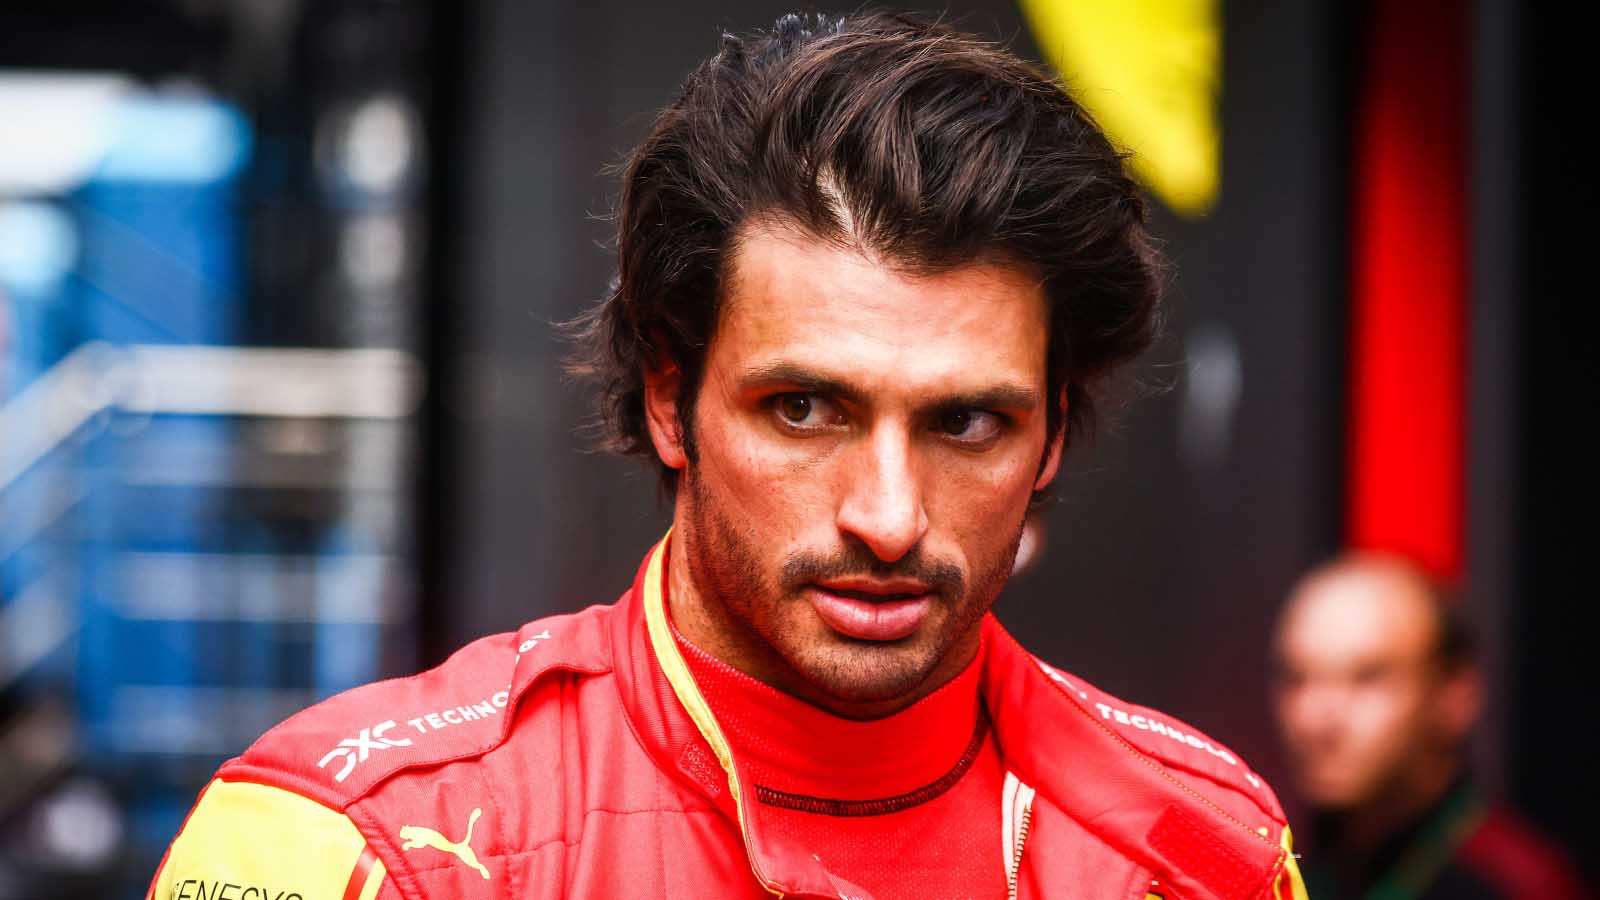 Italian Grand Prix Carlos Sainz takes stunning pole for Ferrari at